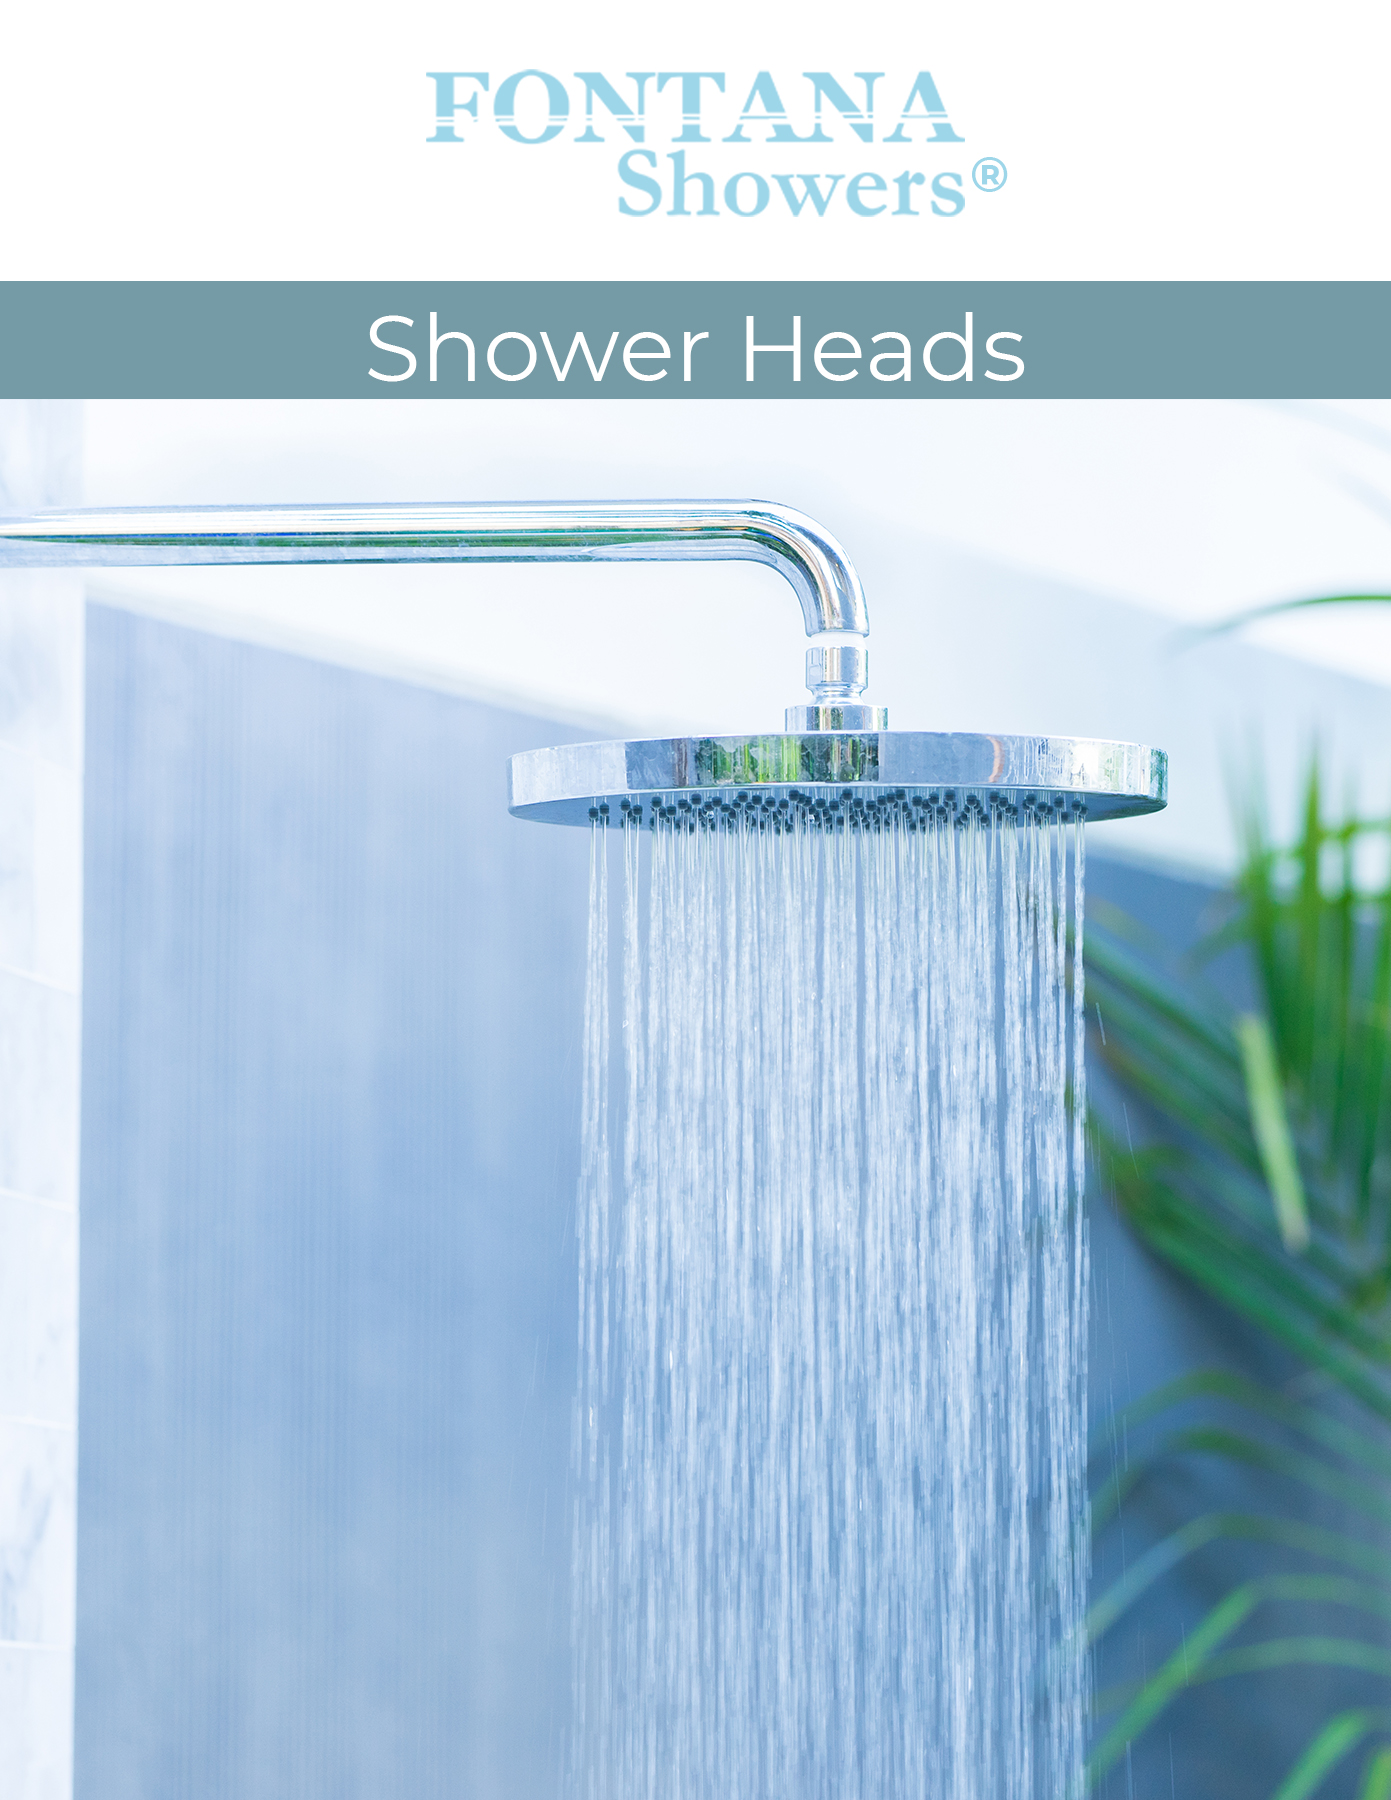 Fontana Showers commercial catalog Showerhead